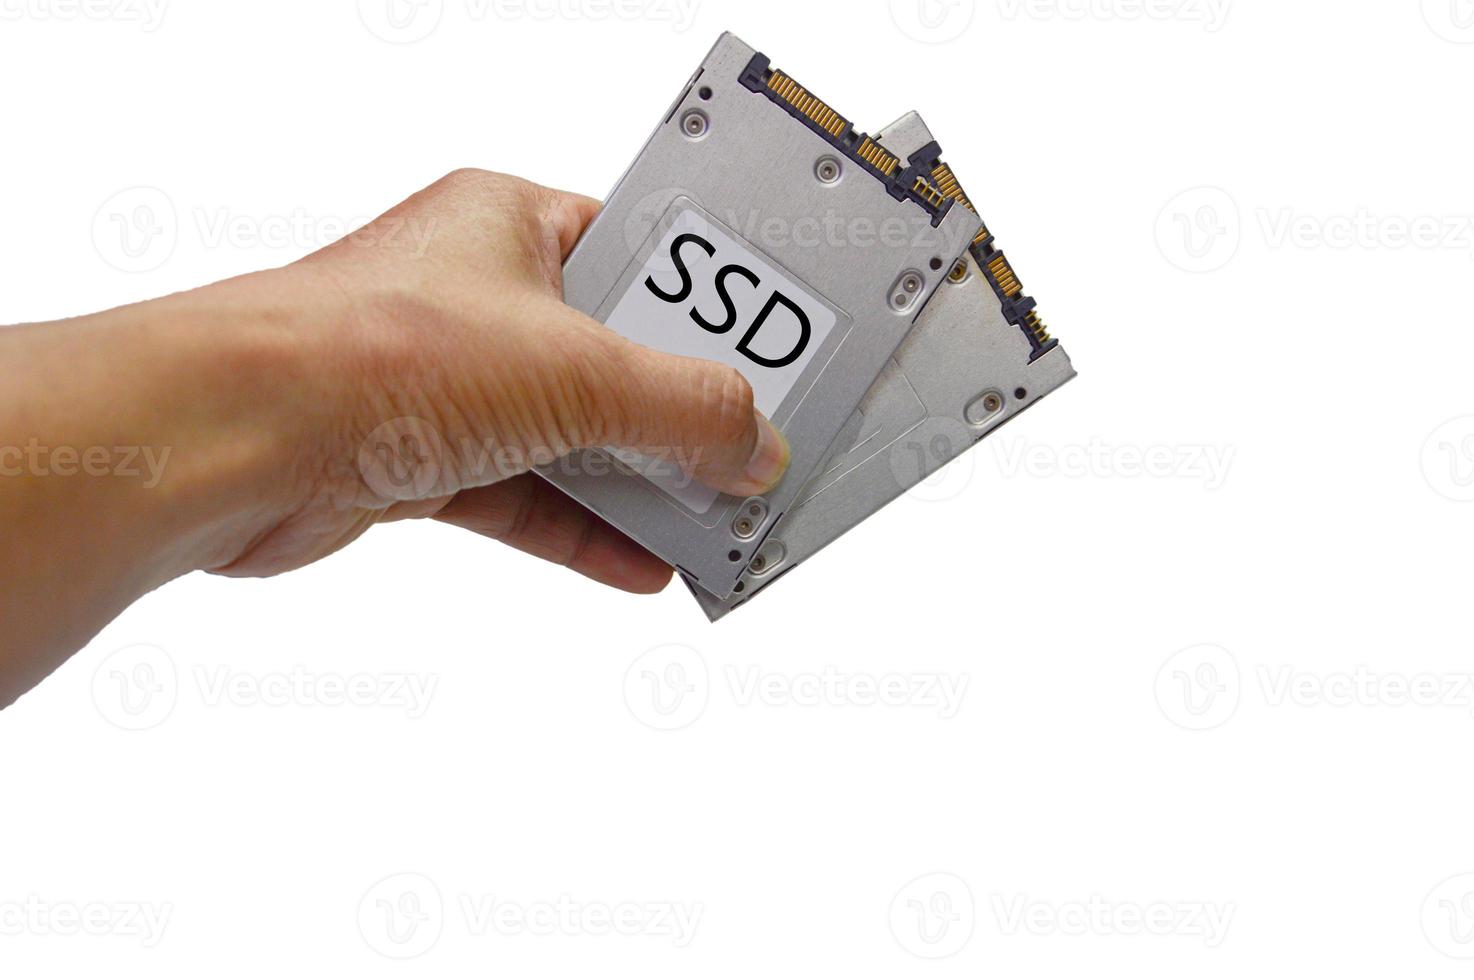 SSD hard drive, hand holding SSD photo